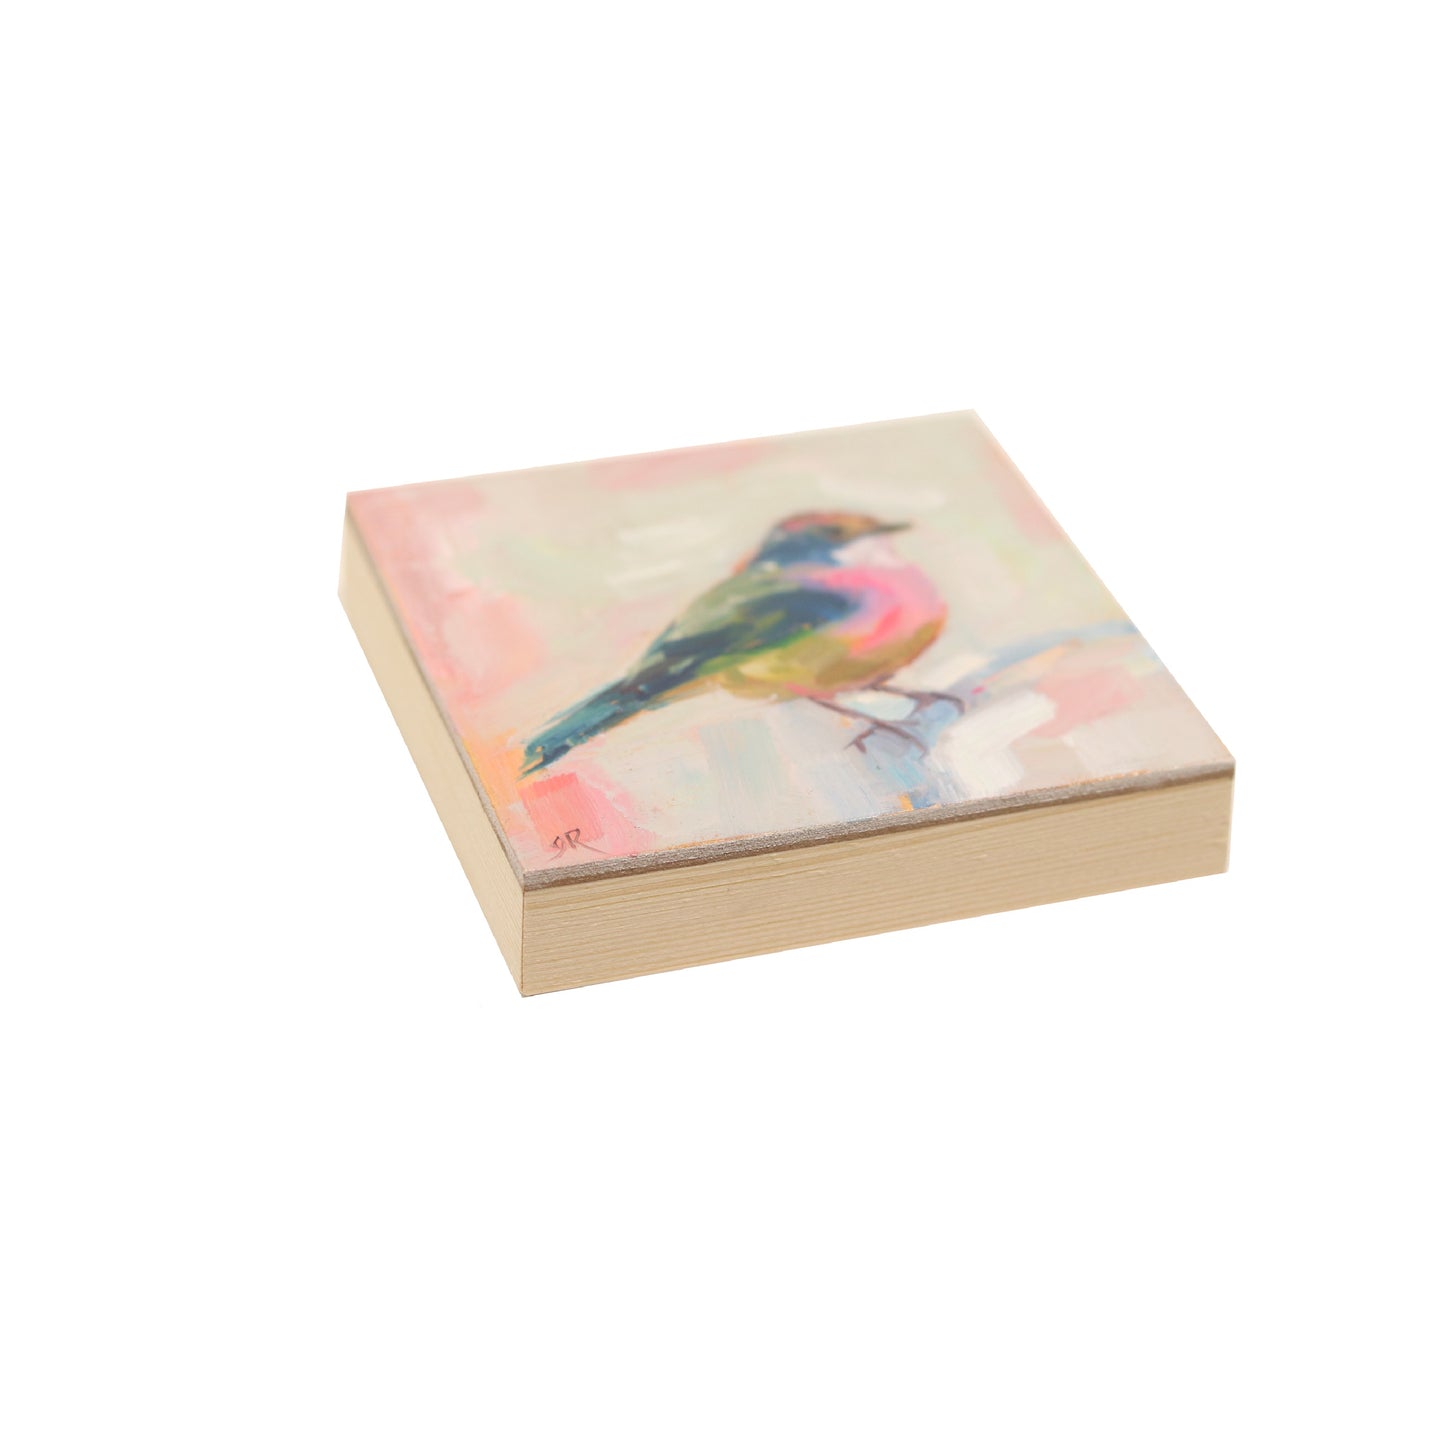 Colorful Mini Bird | Original Oil Painting | 4”x4”